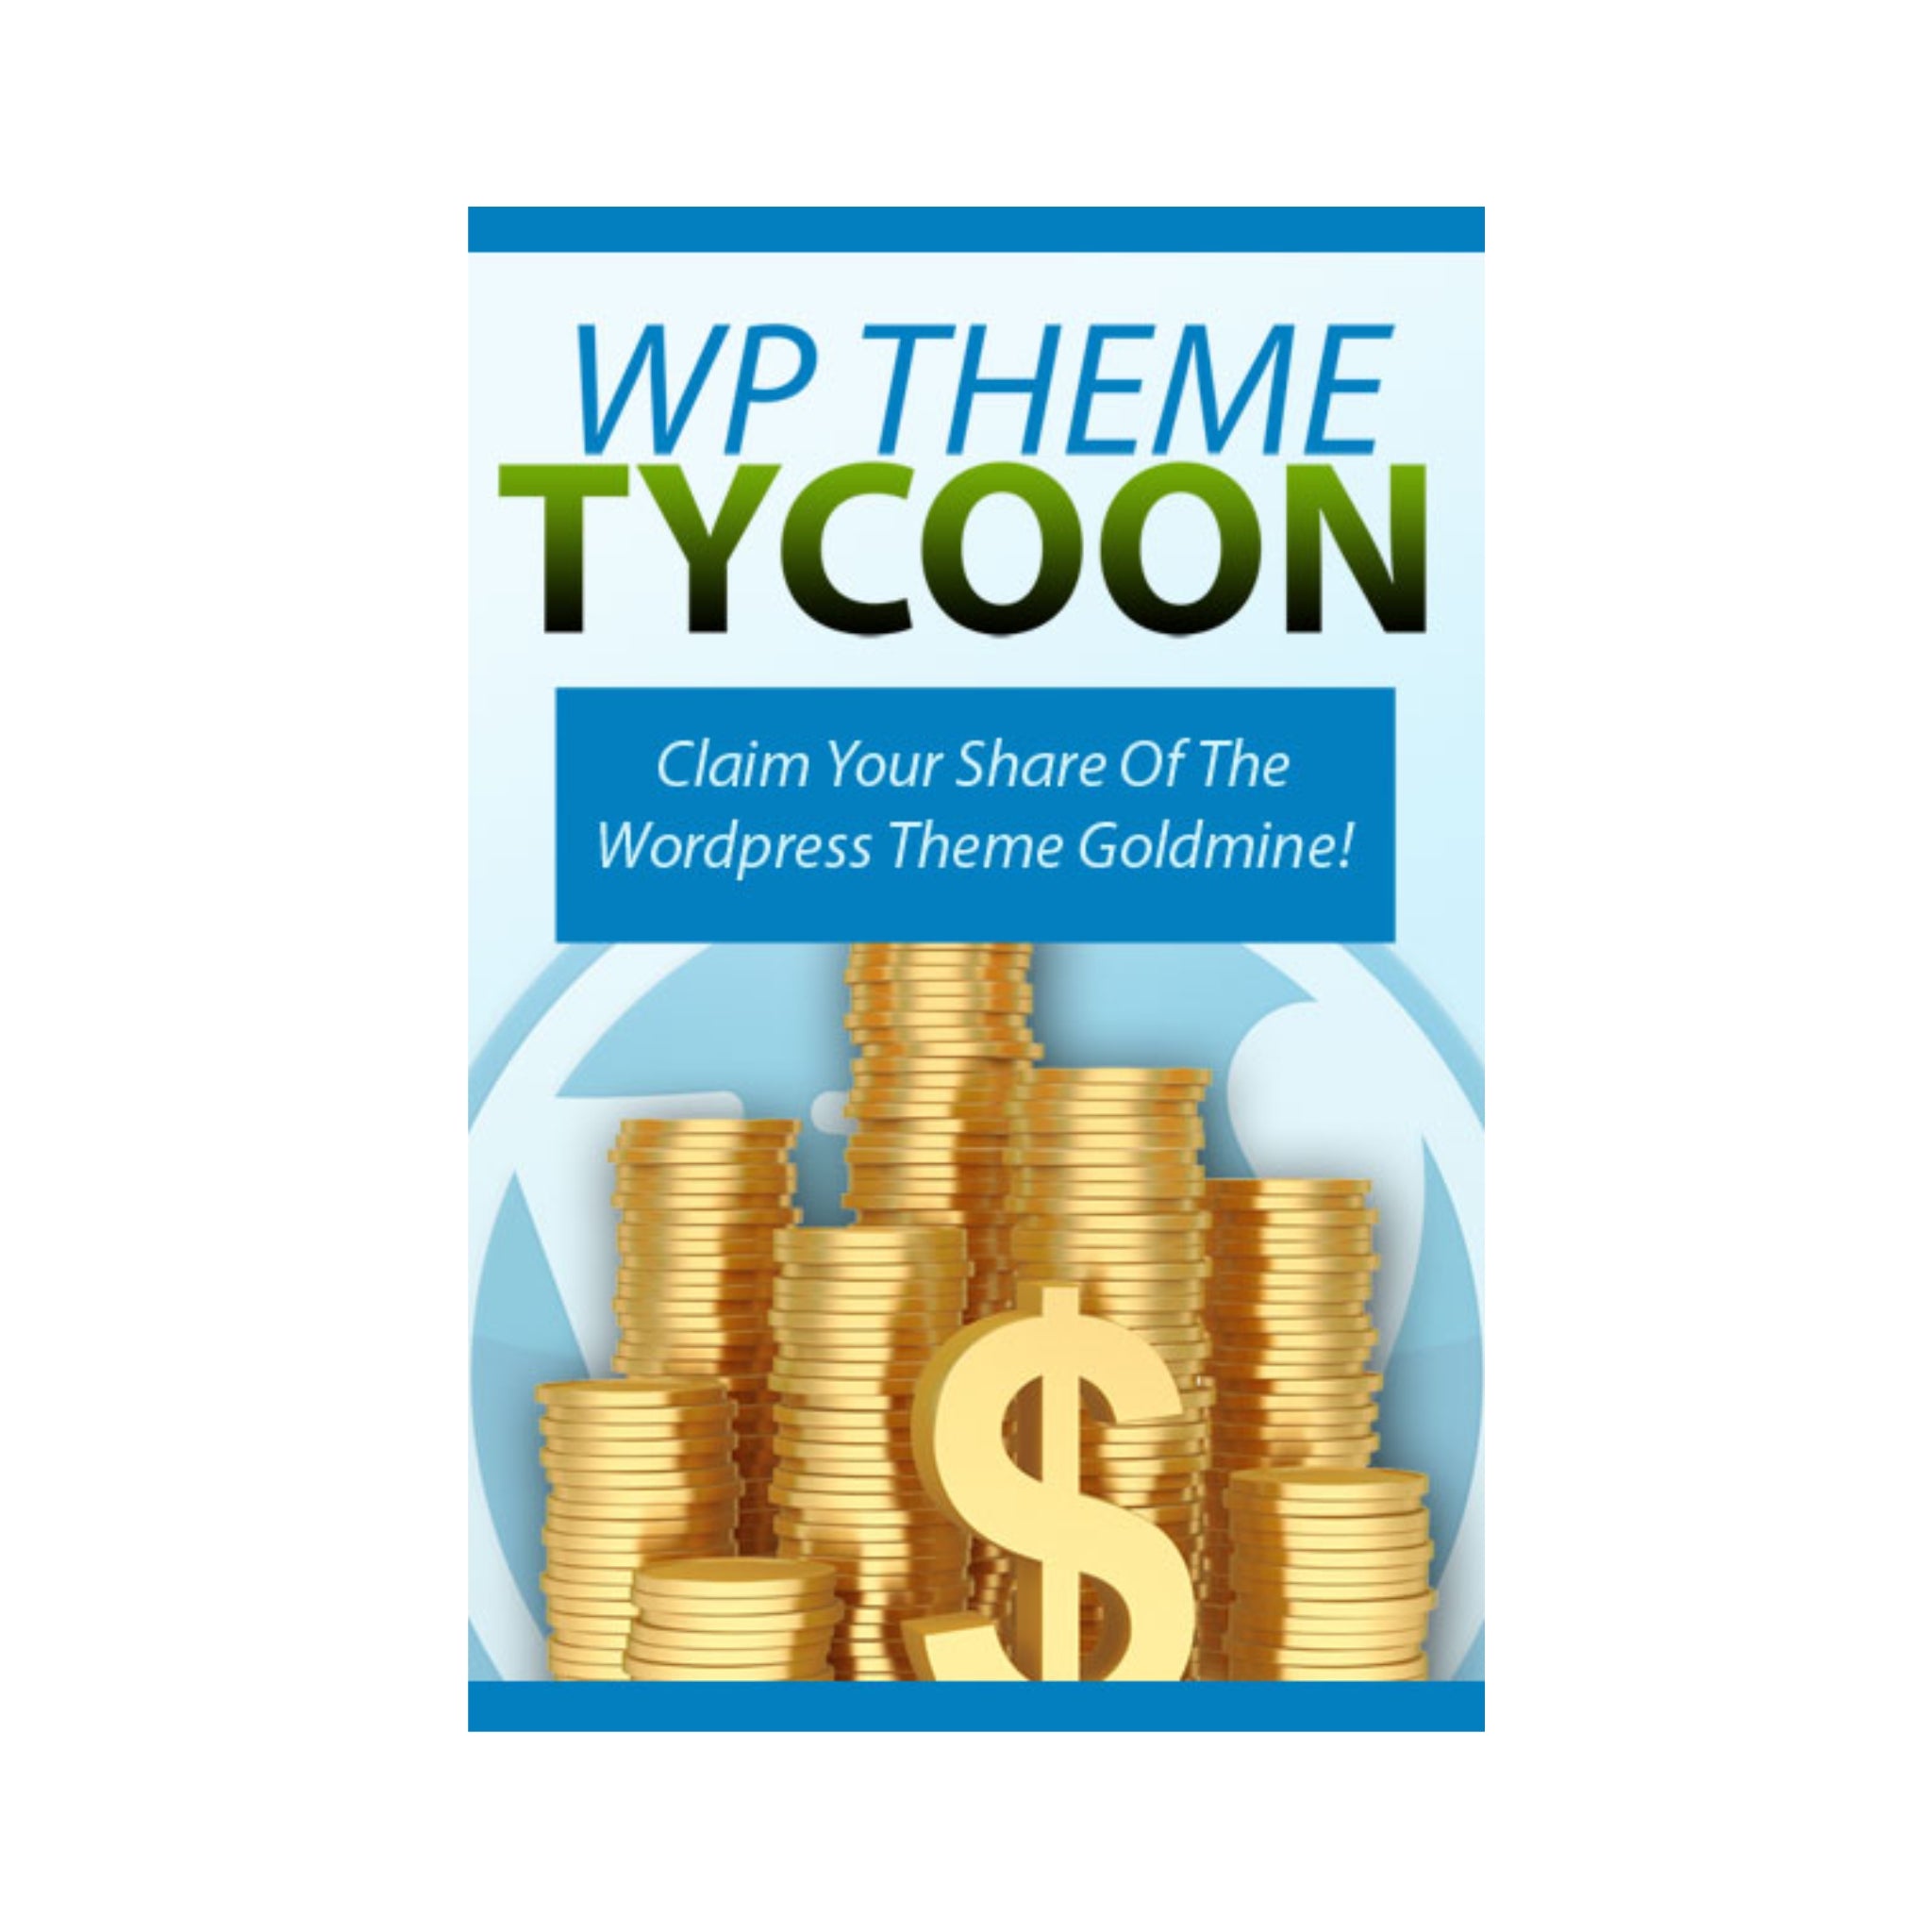 WP Theme Tycoon Ebook